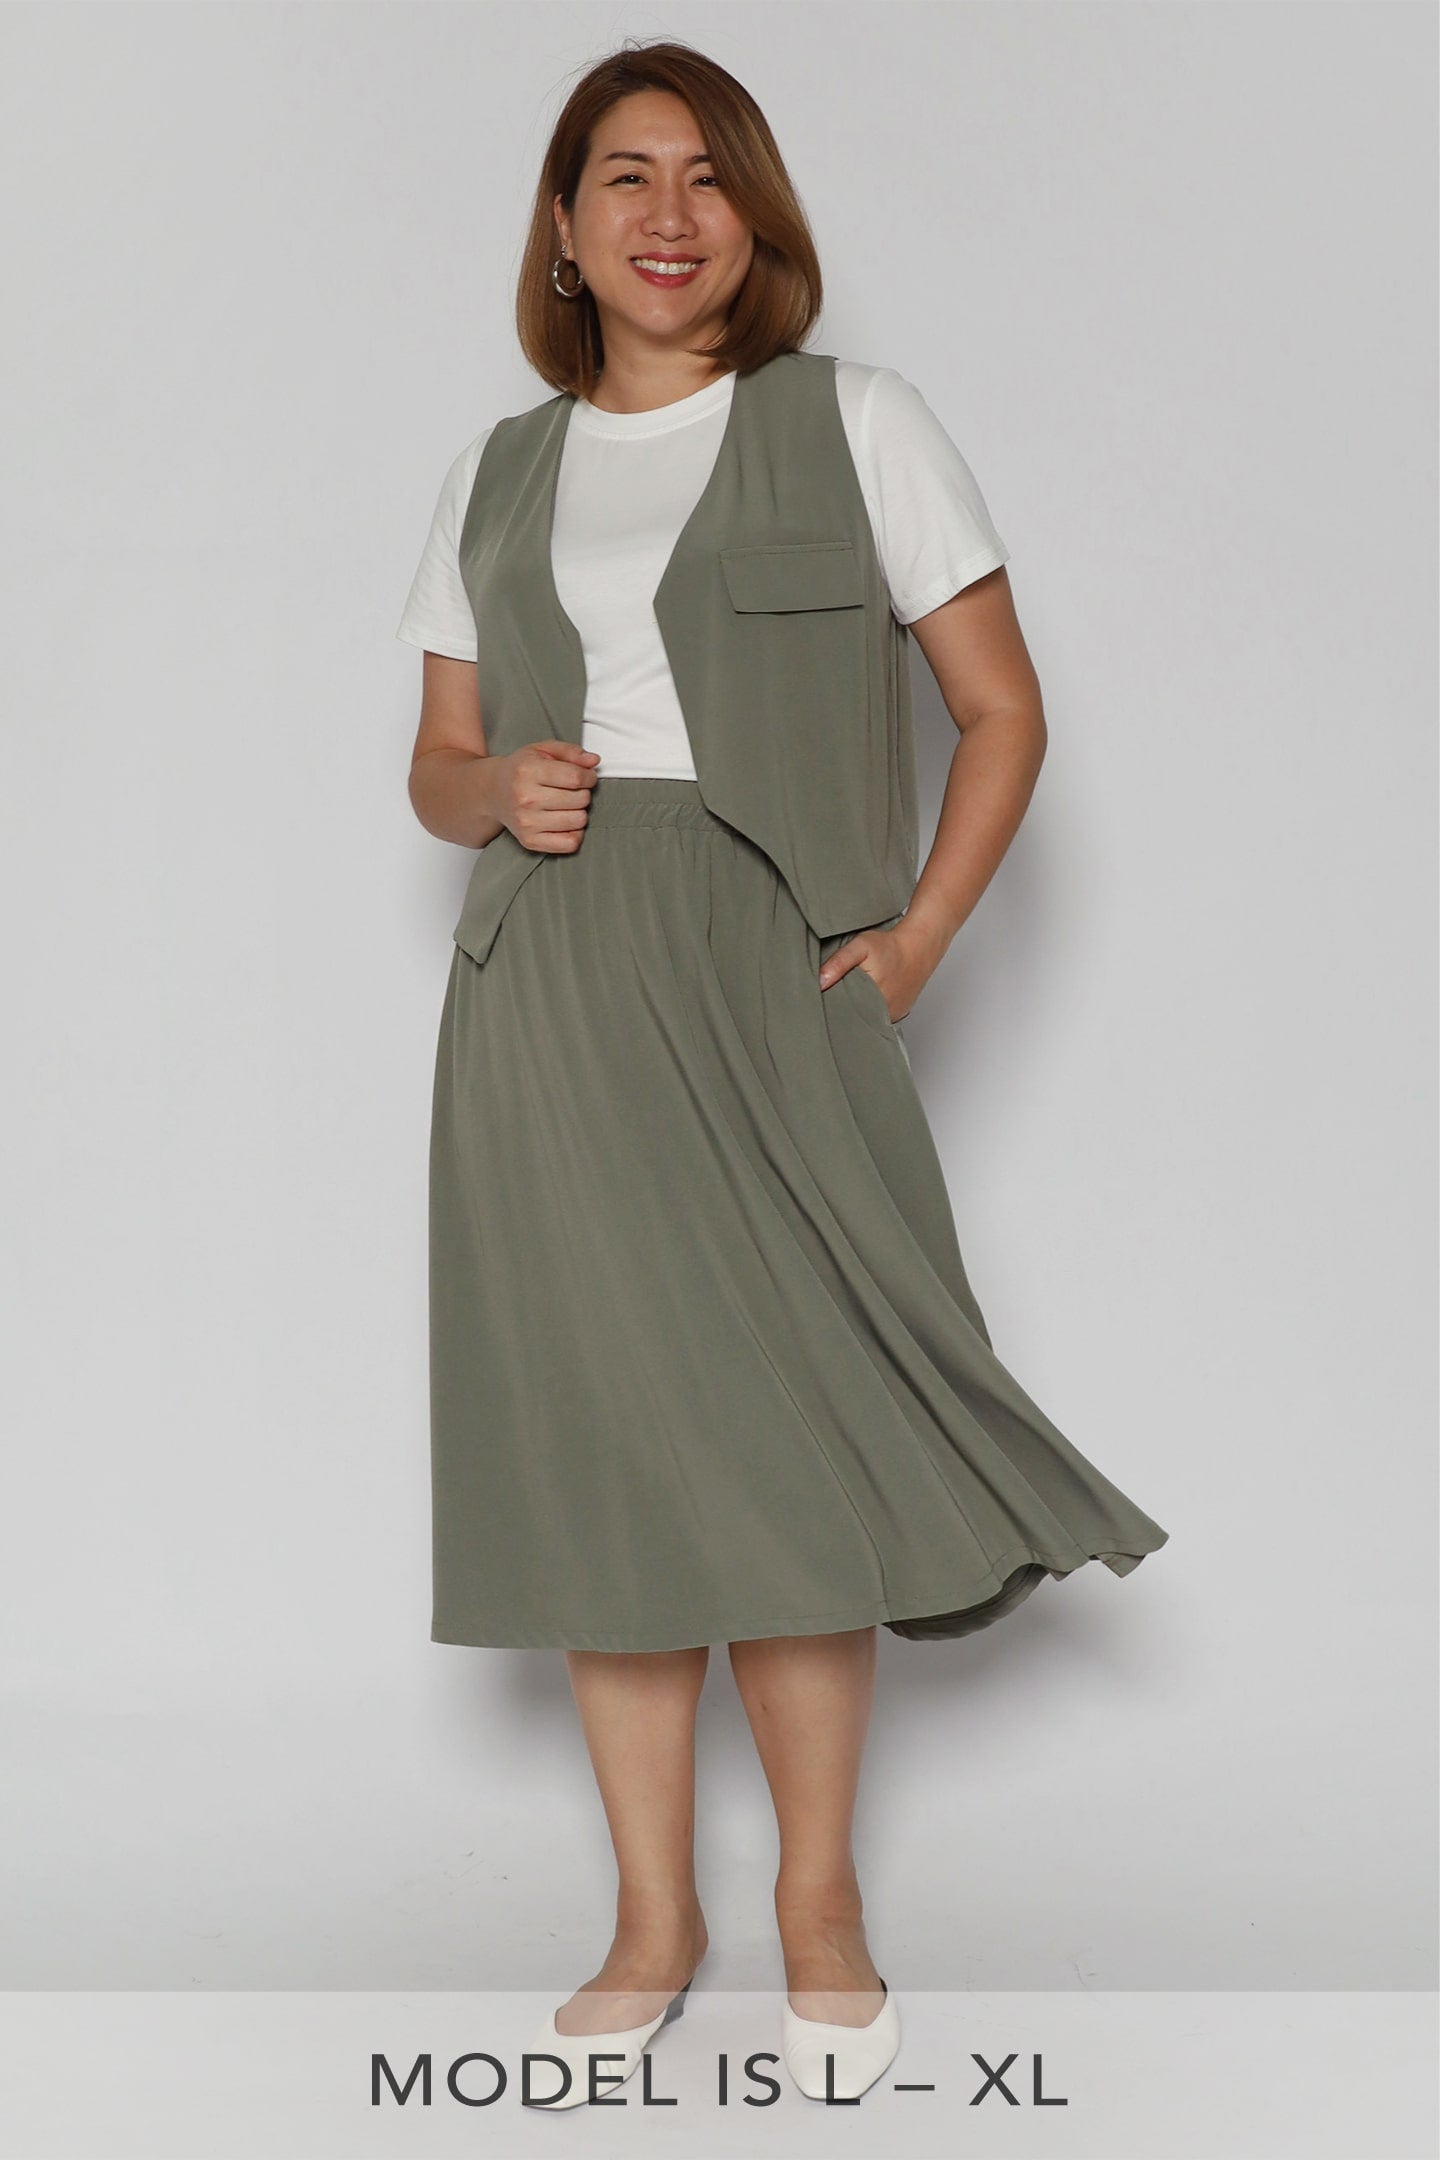 Remy 3 in 1 Vest Skirt Set in Green